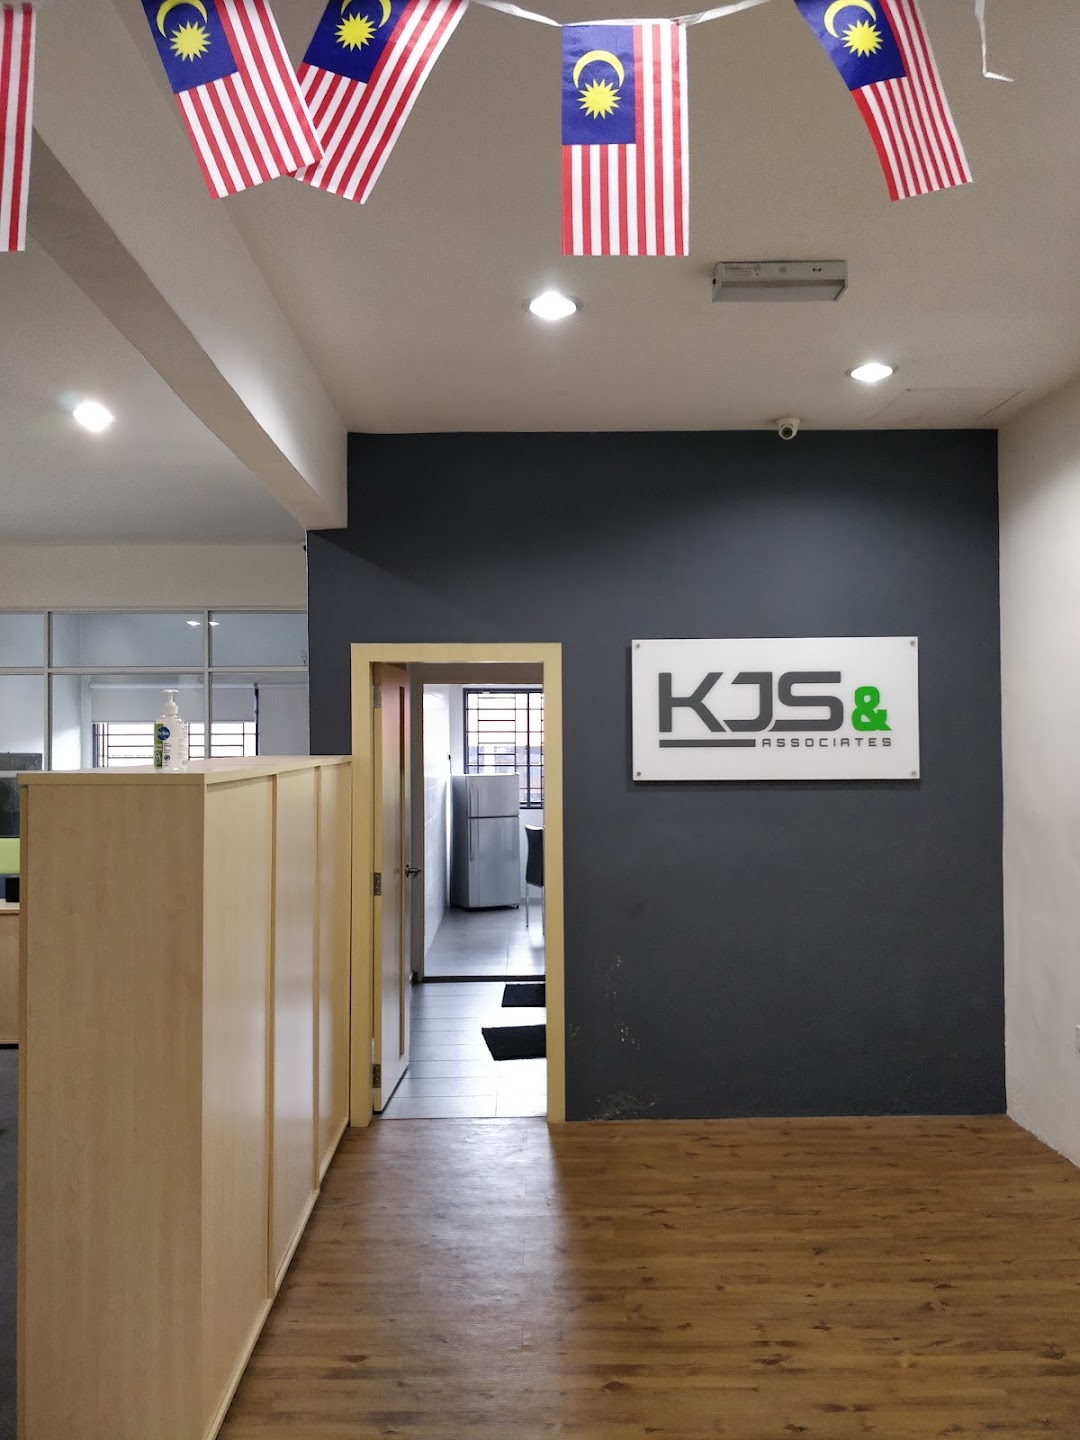 KJS & Associates